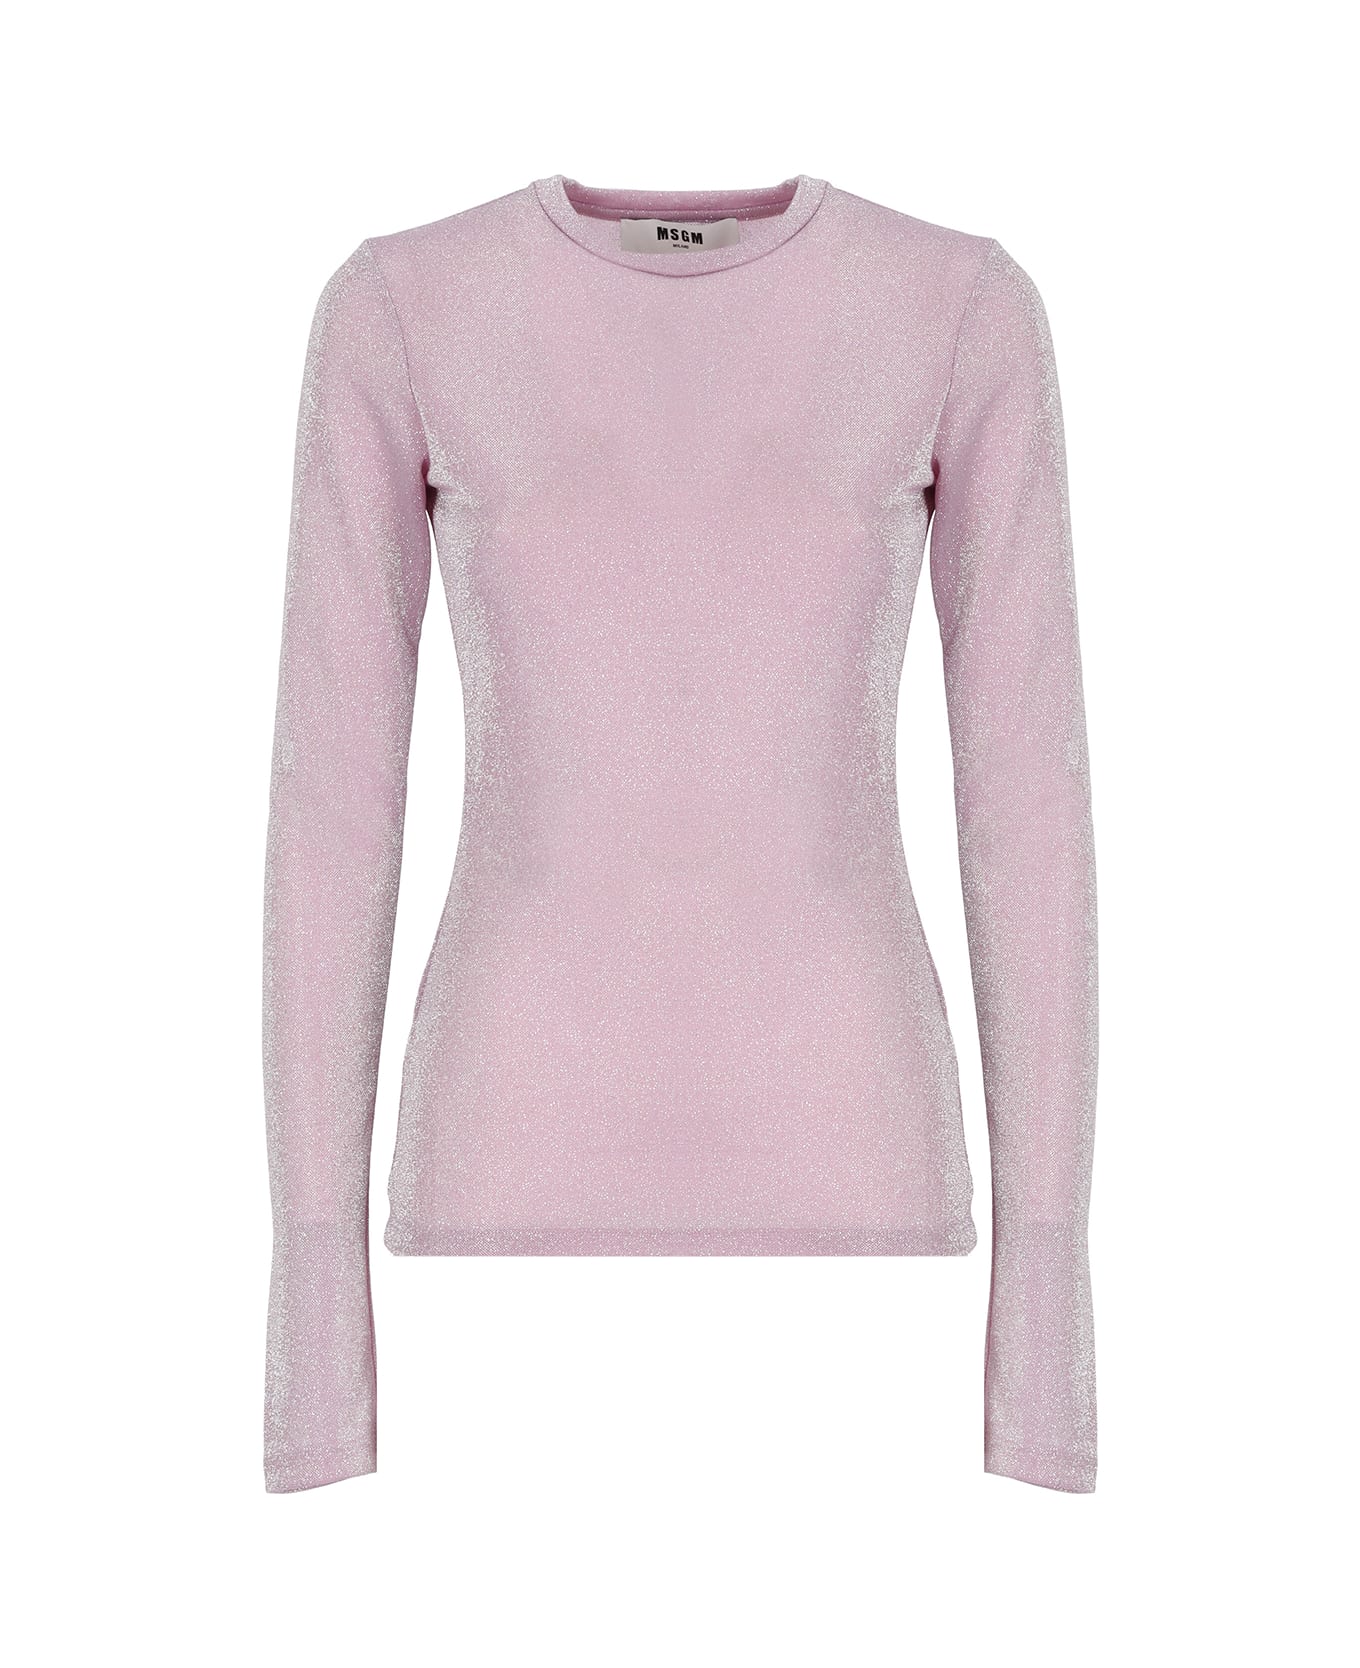 MSGM Lurex T-shirt - Pink Tシャツ